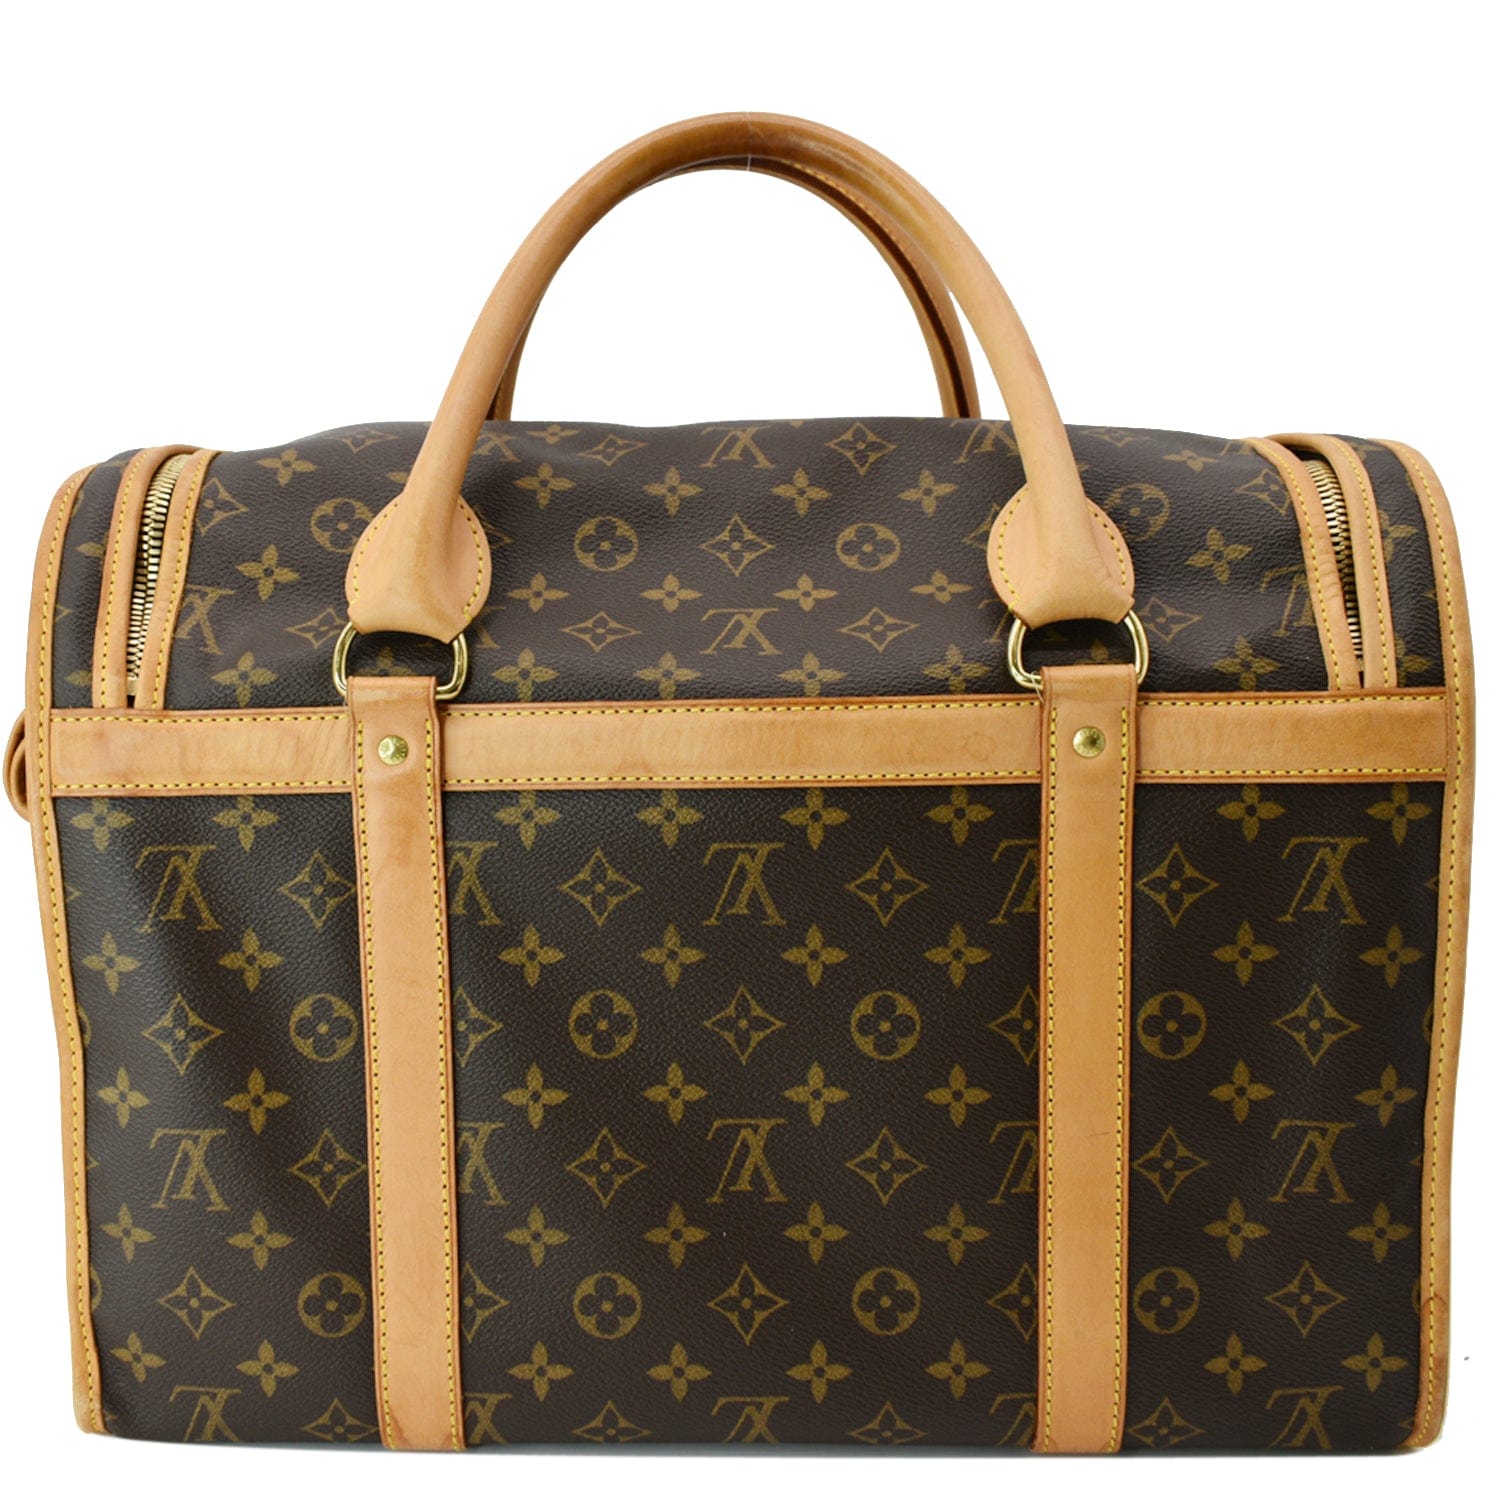 Louis Vuitton - Louis Vuitton Dog Carrier 40 Monogram Canvas Luggage Bag